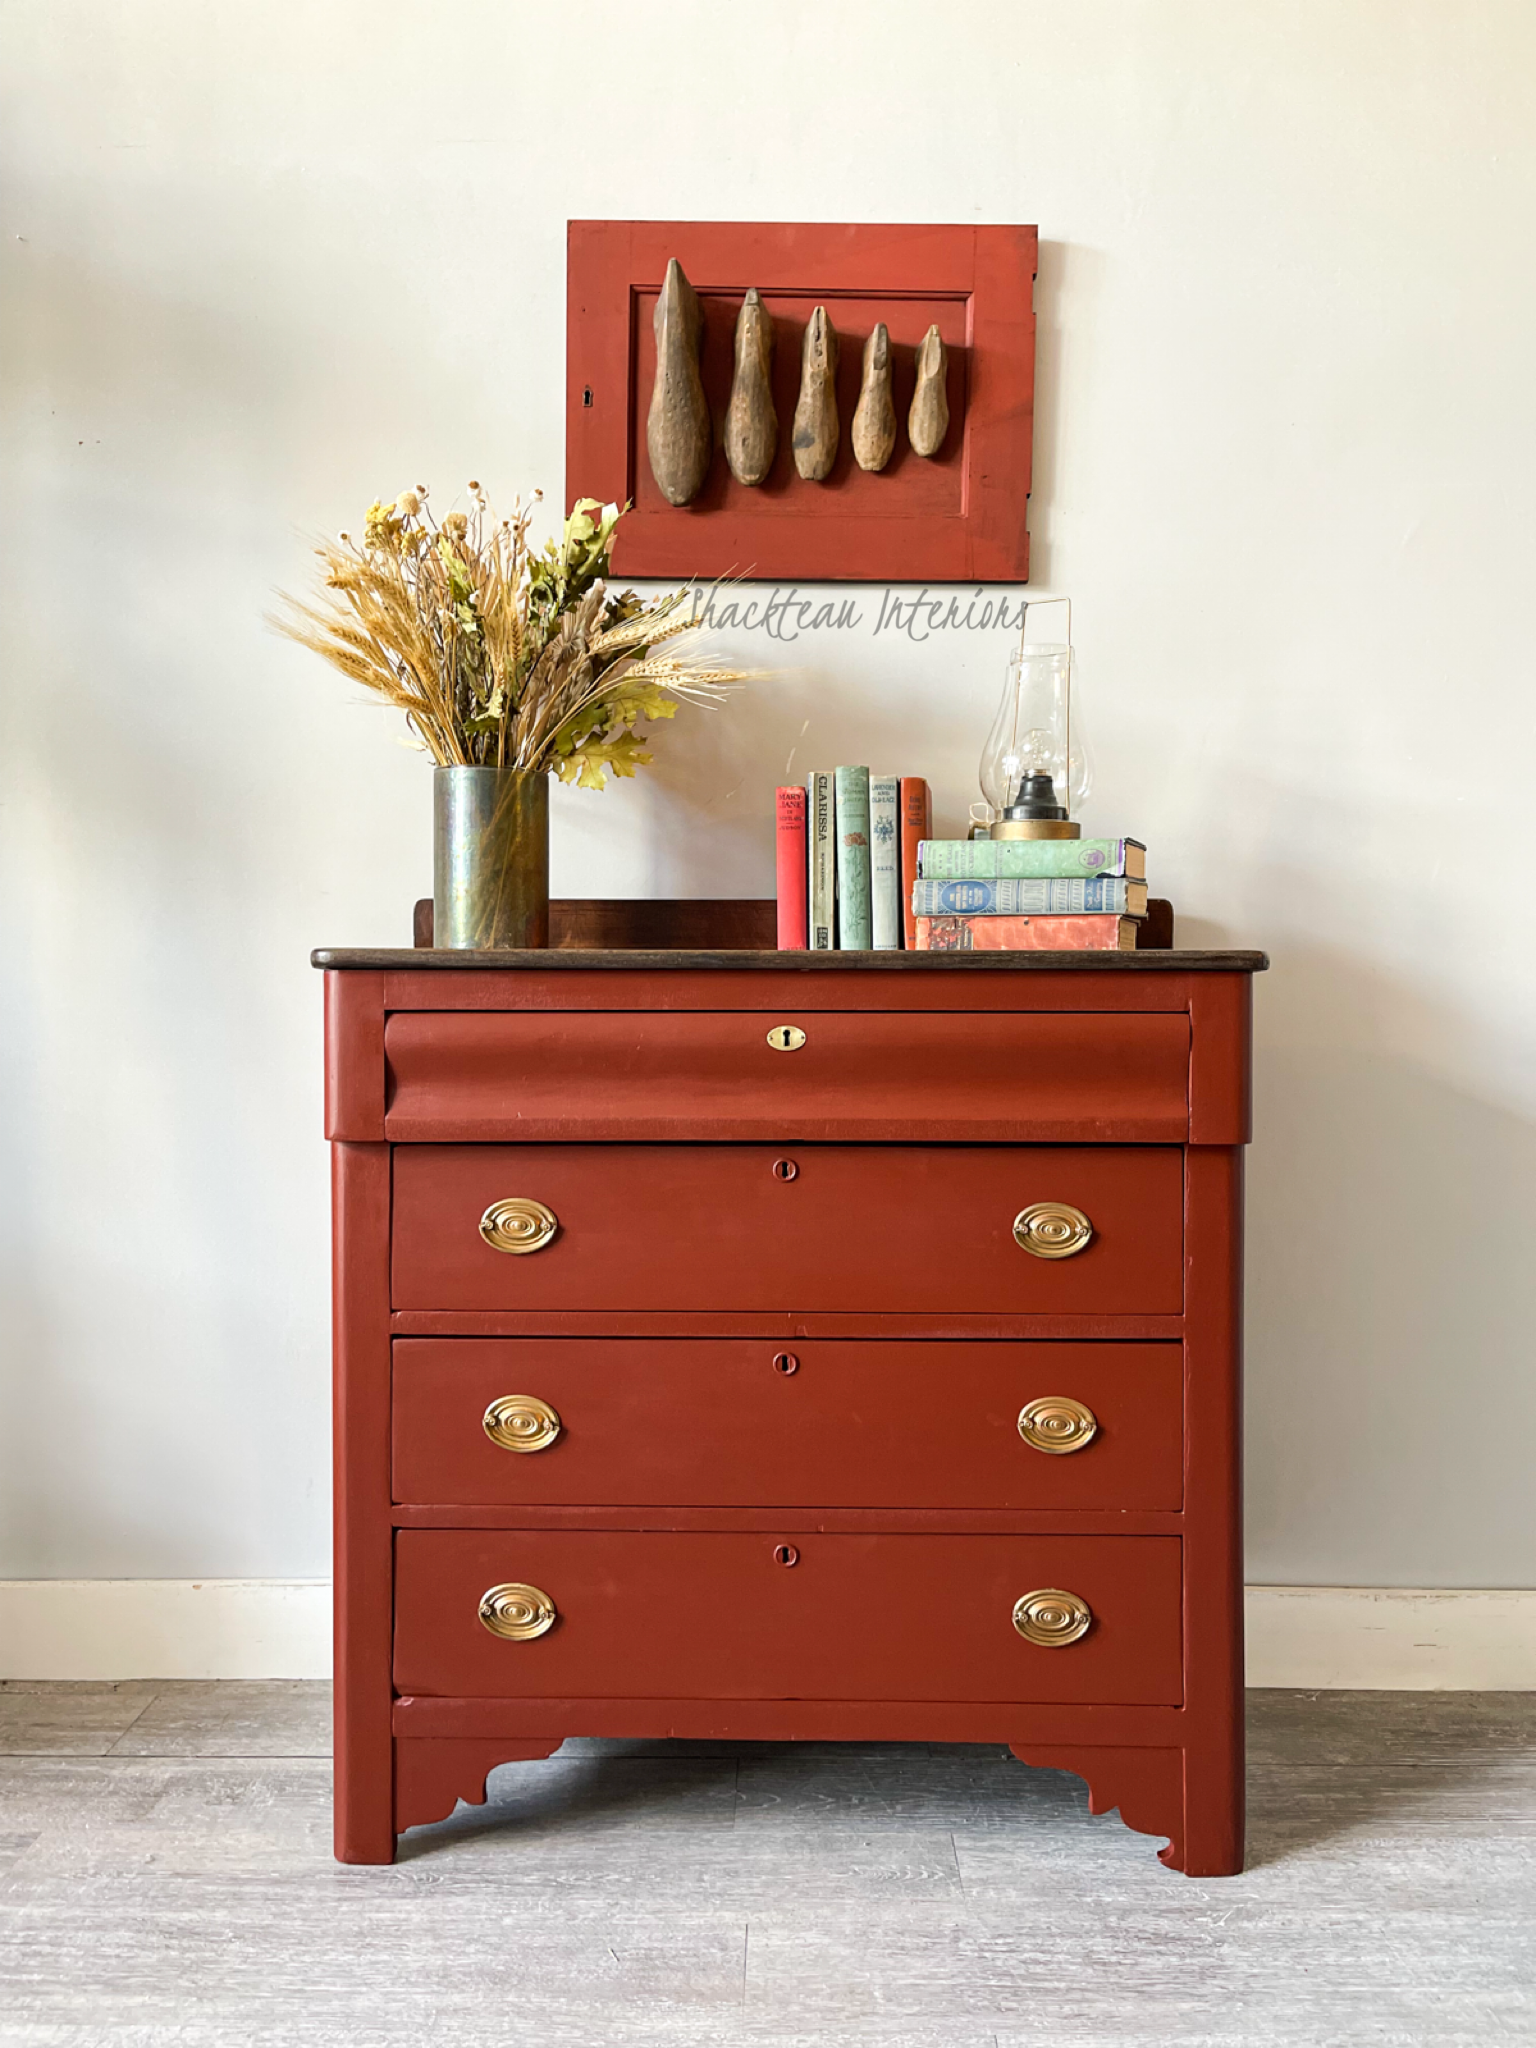 Tuck’s Red Antique Dresser